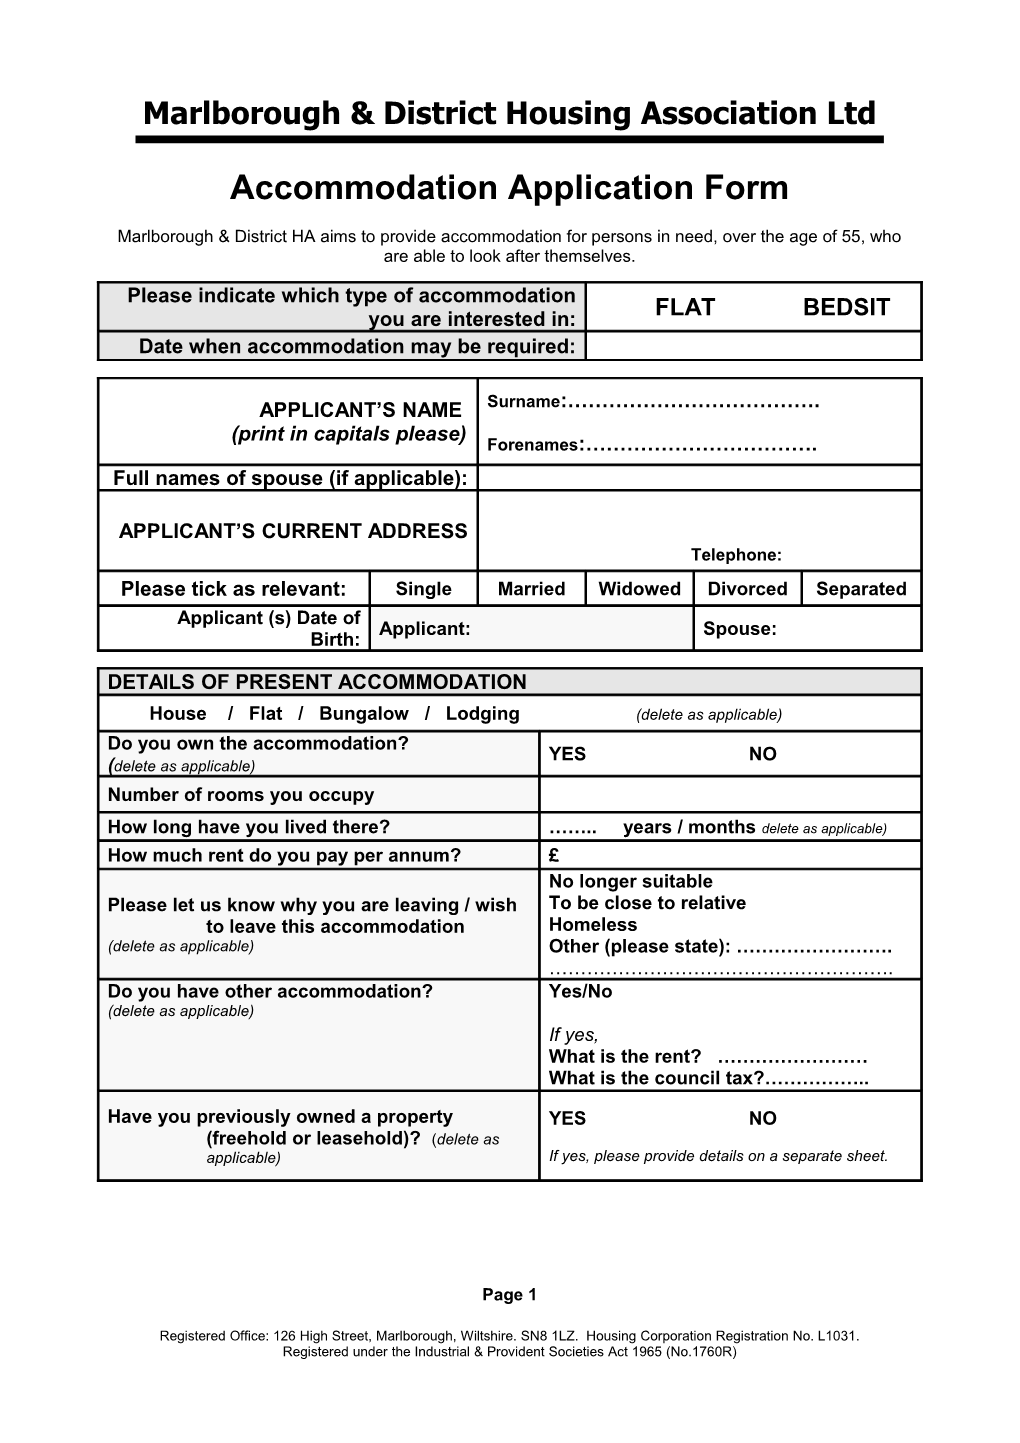 MDHA Application Form